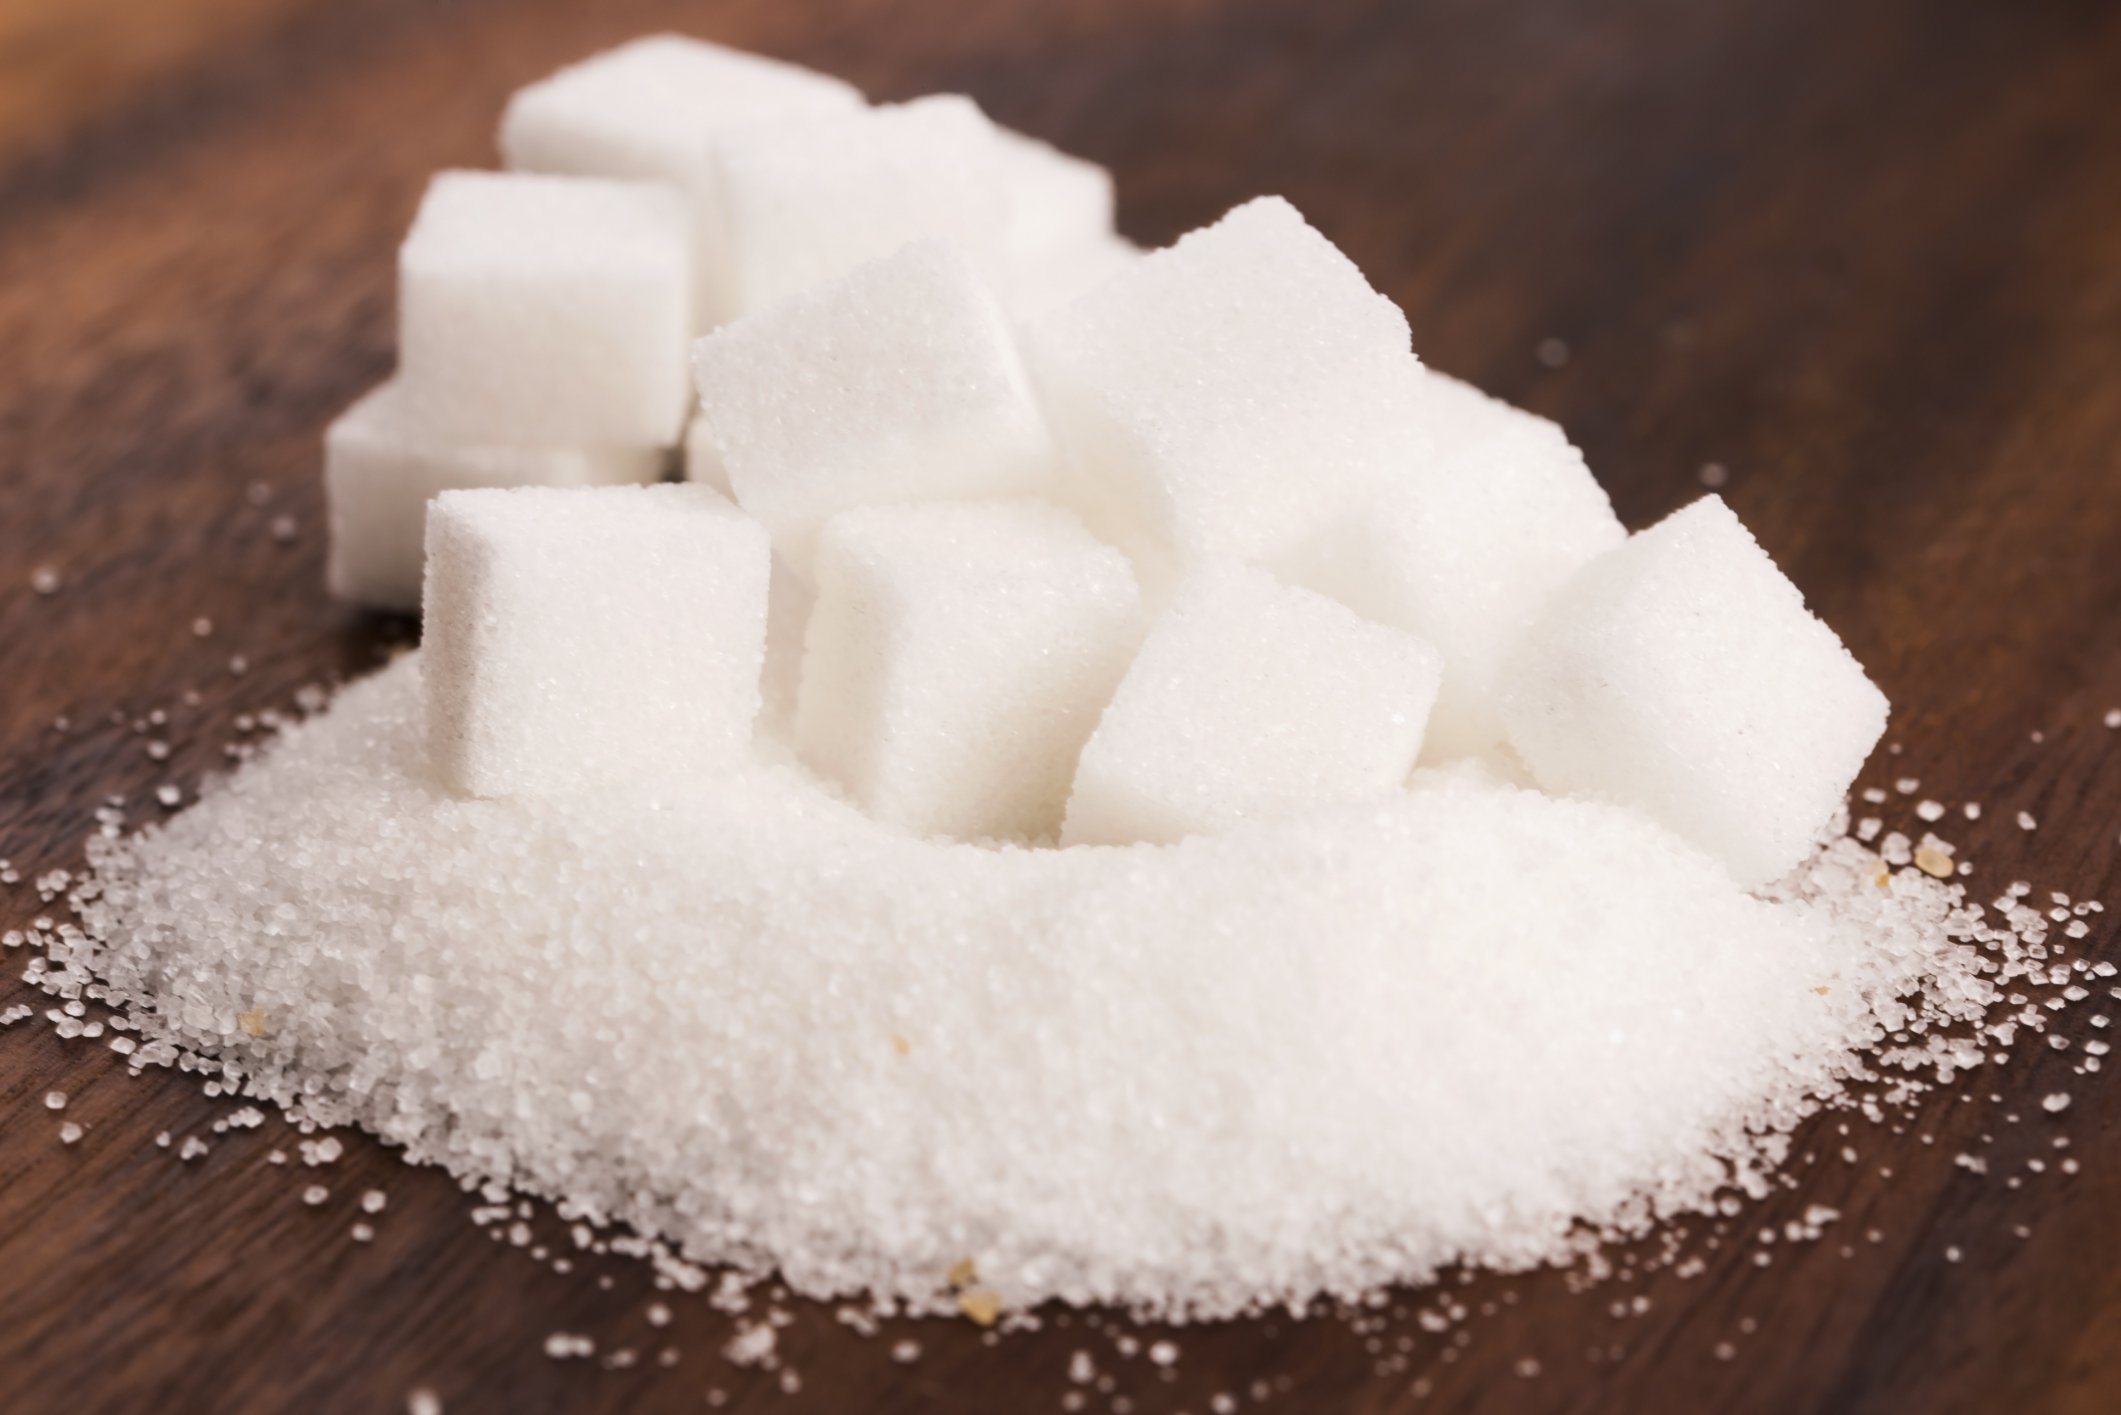 A b of sugar. Сахар. Кусочек сахара. Сахар картинка для детей. Крупный сахар.